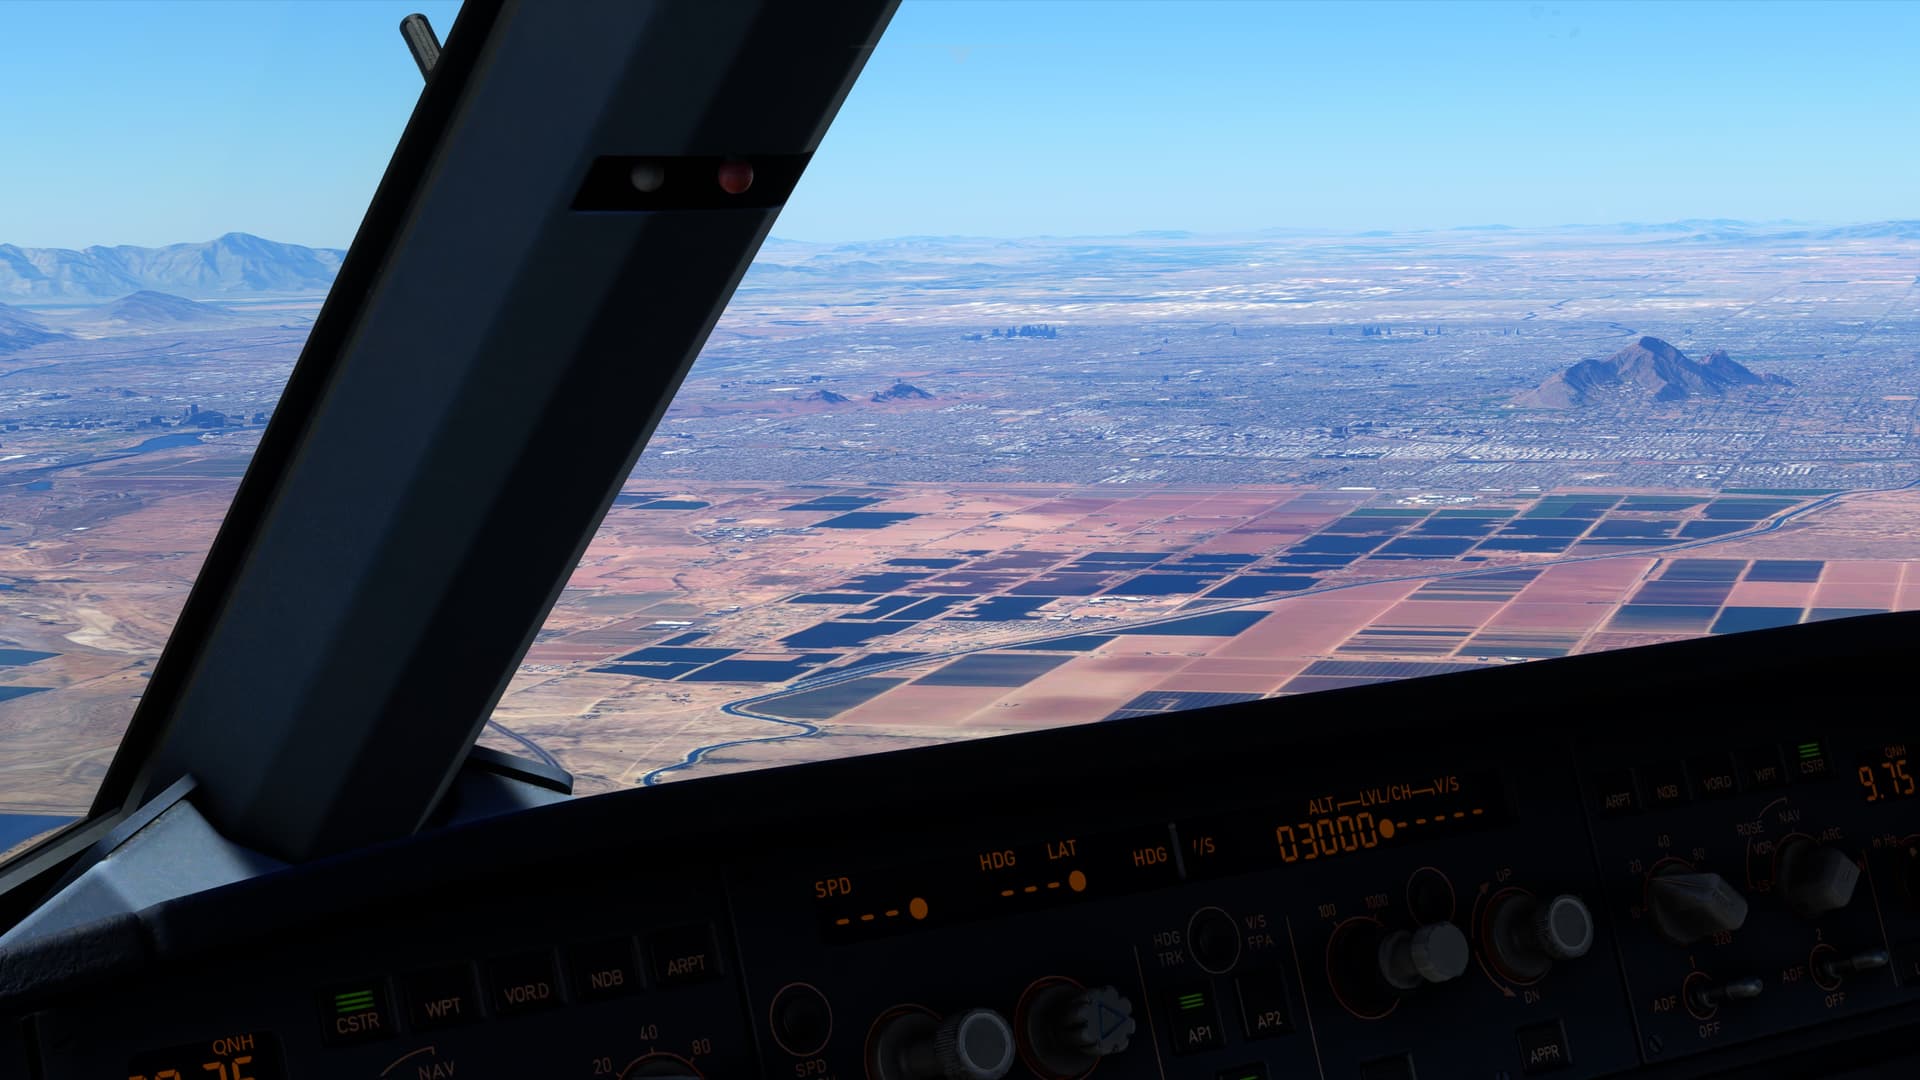 Italy - Capri Photogrammetry Lod20 for Microsoft Flight Simulator